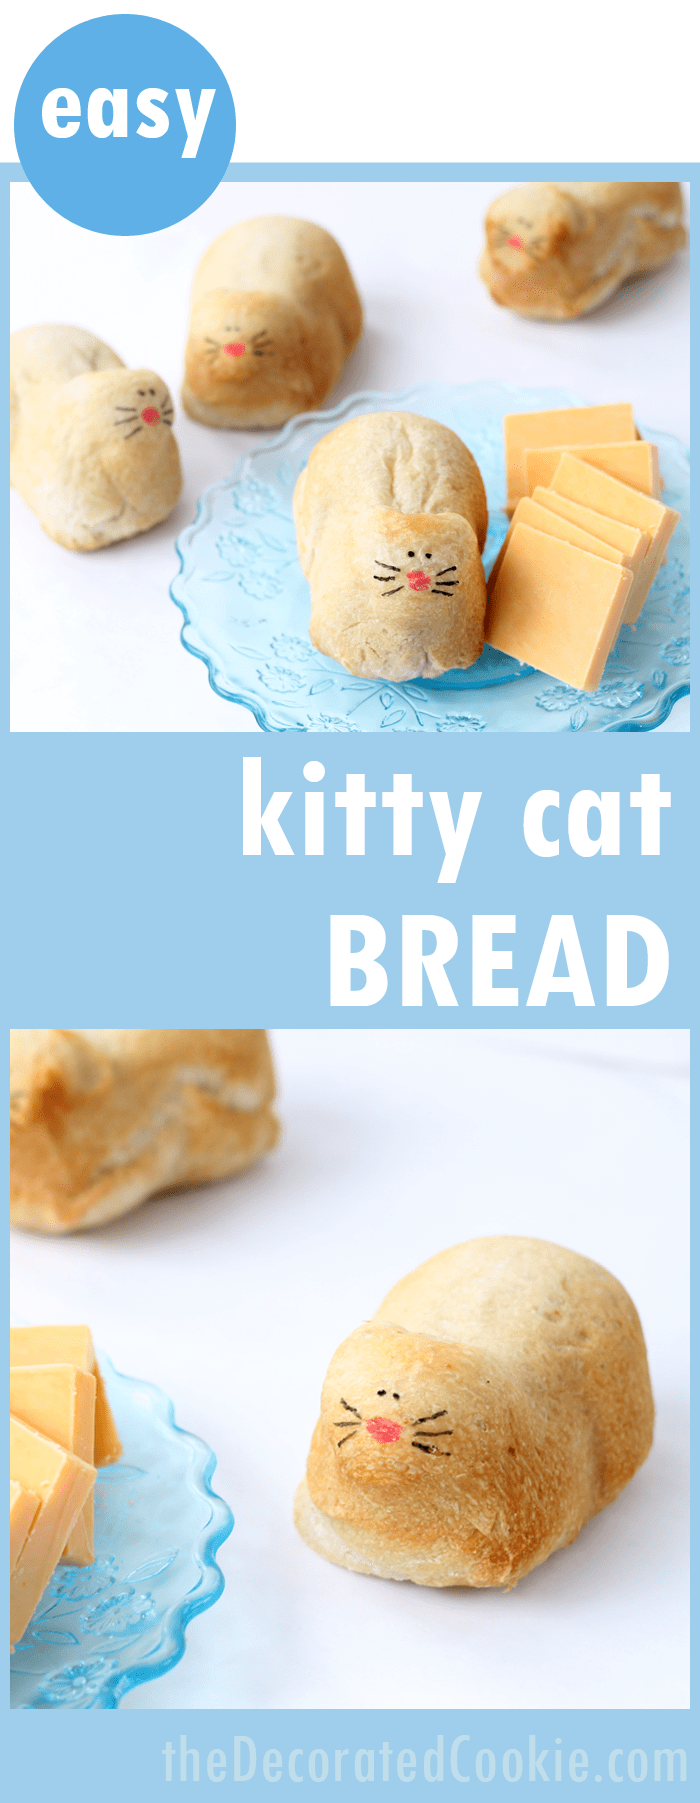 kitty cat bread loaf 